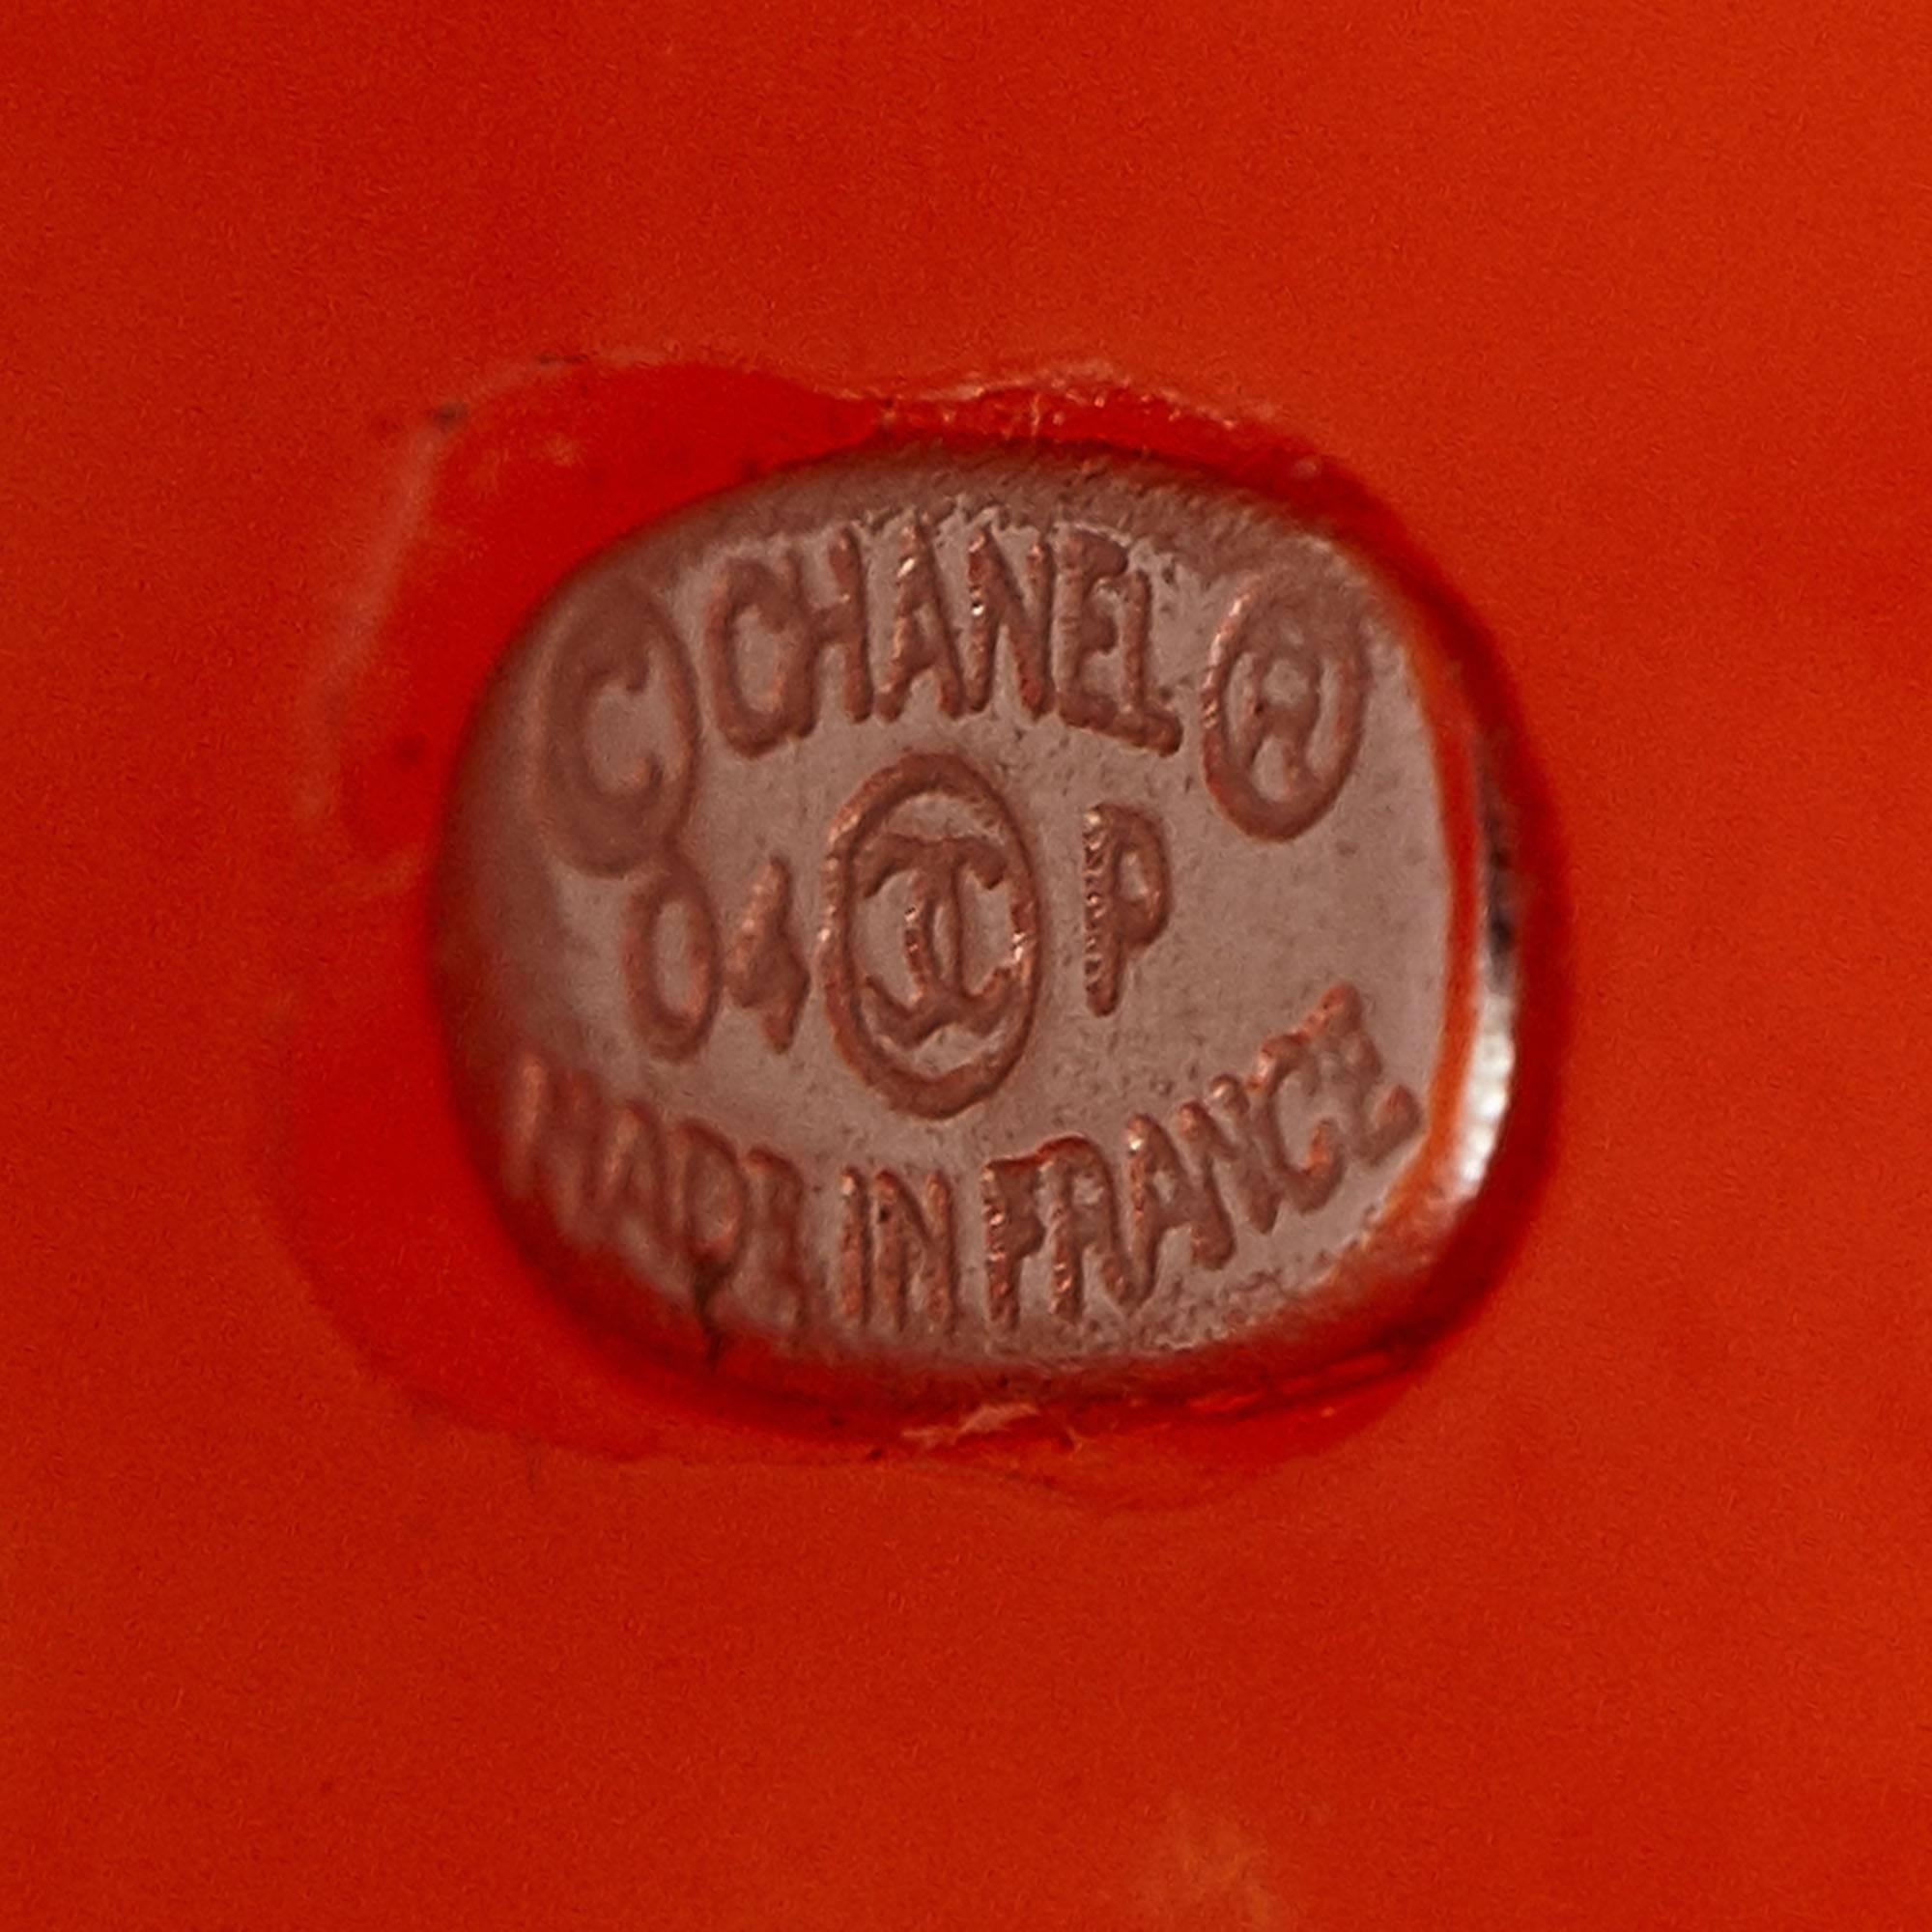 chanel orange ring